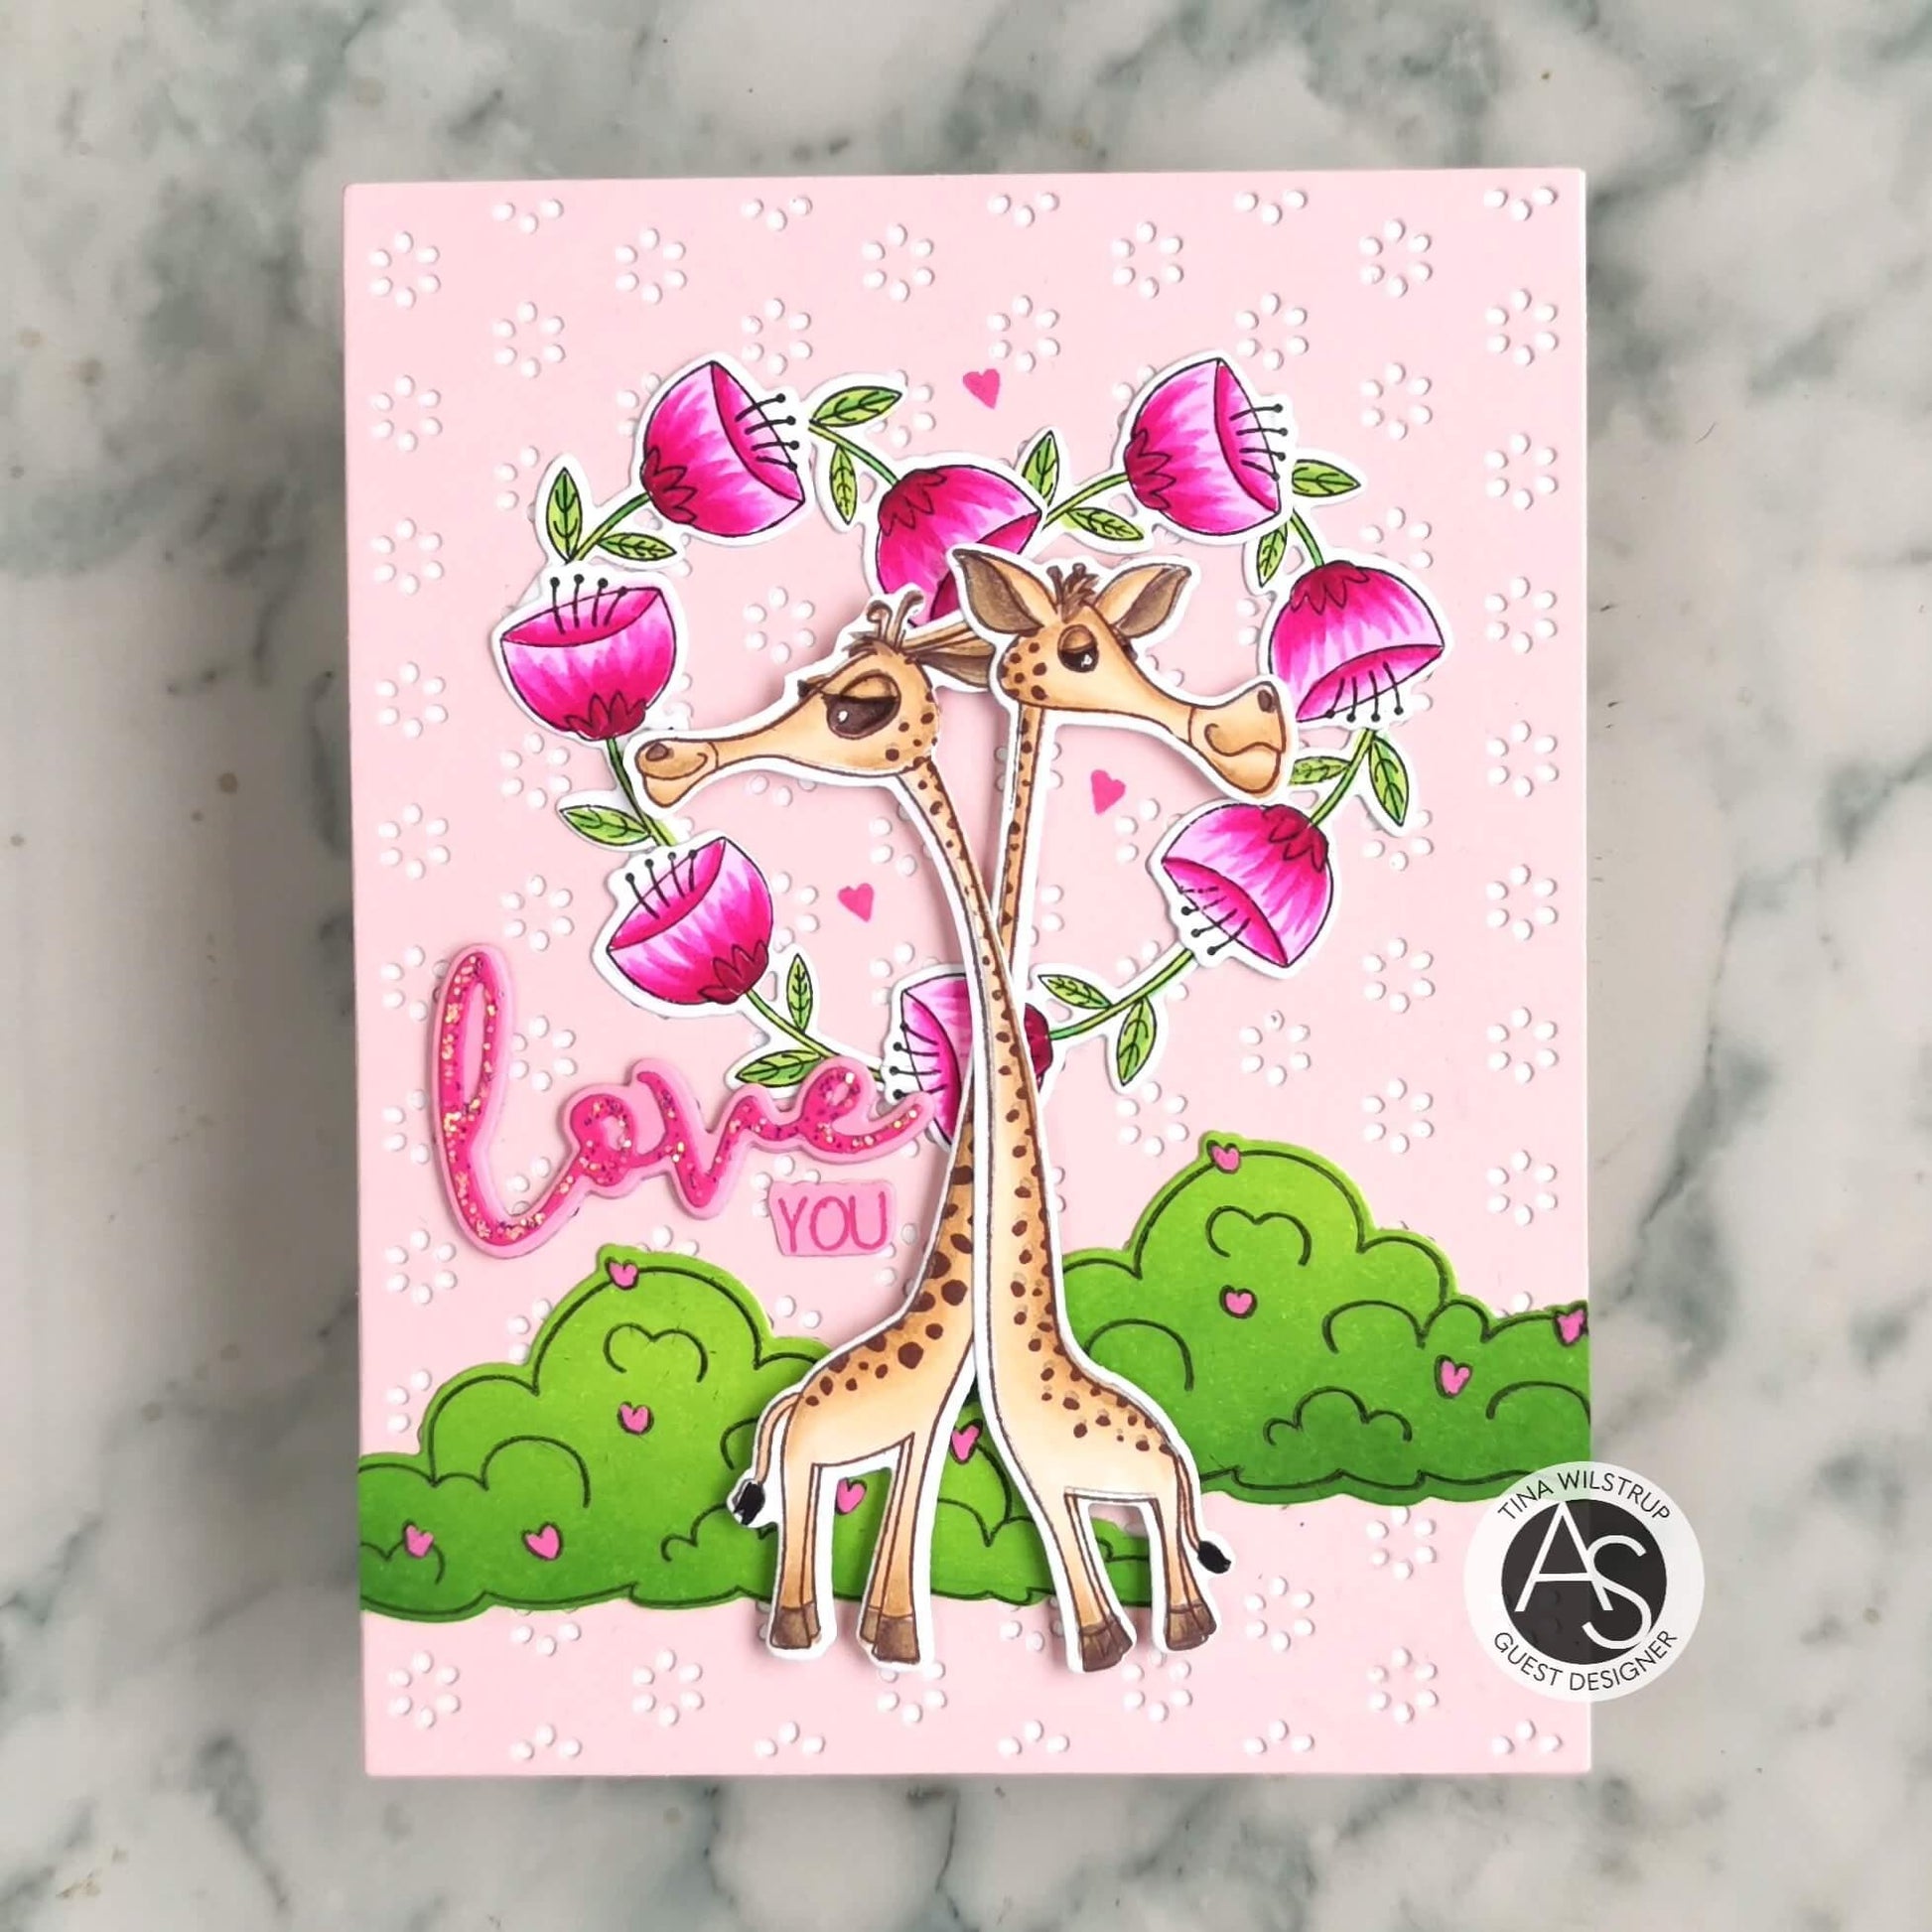 Alex-syberia-designs-giraffe-stamp-dies-love-valentines-friend-cardmaking-handmadecards-scrapbook-shop-tutorial-cardmakers-love-cards